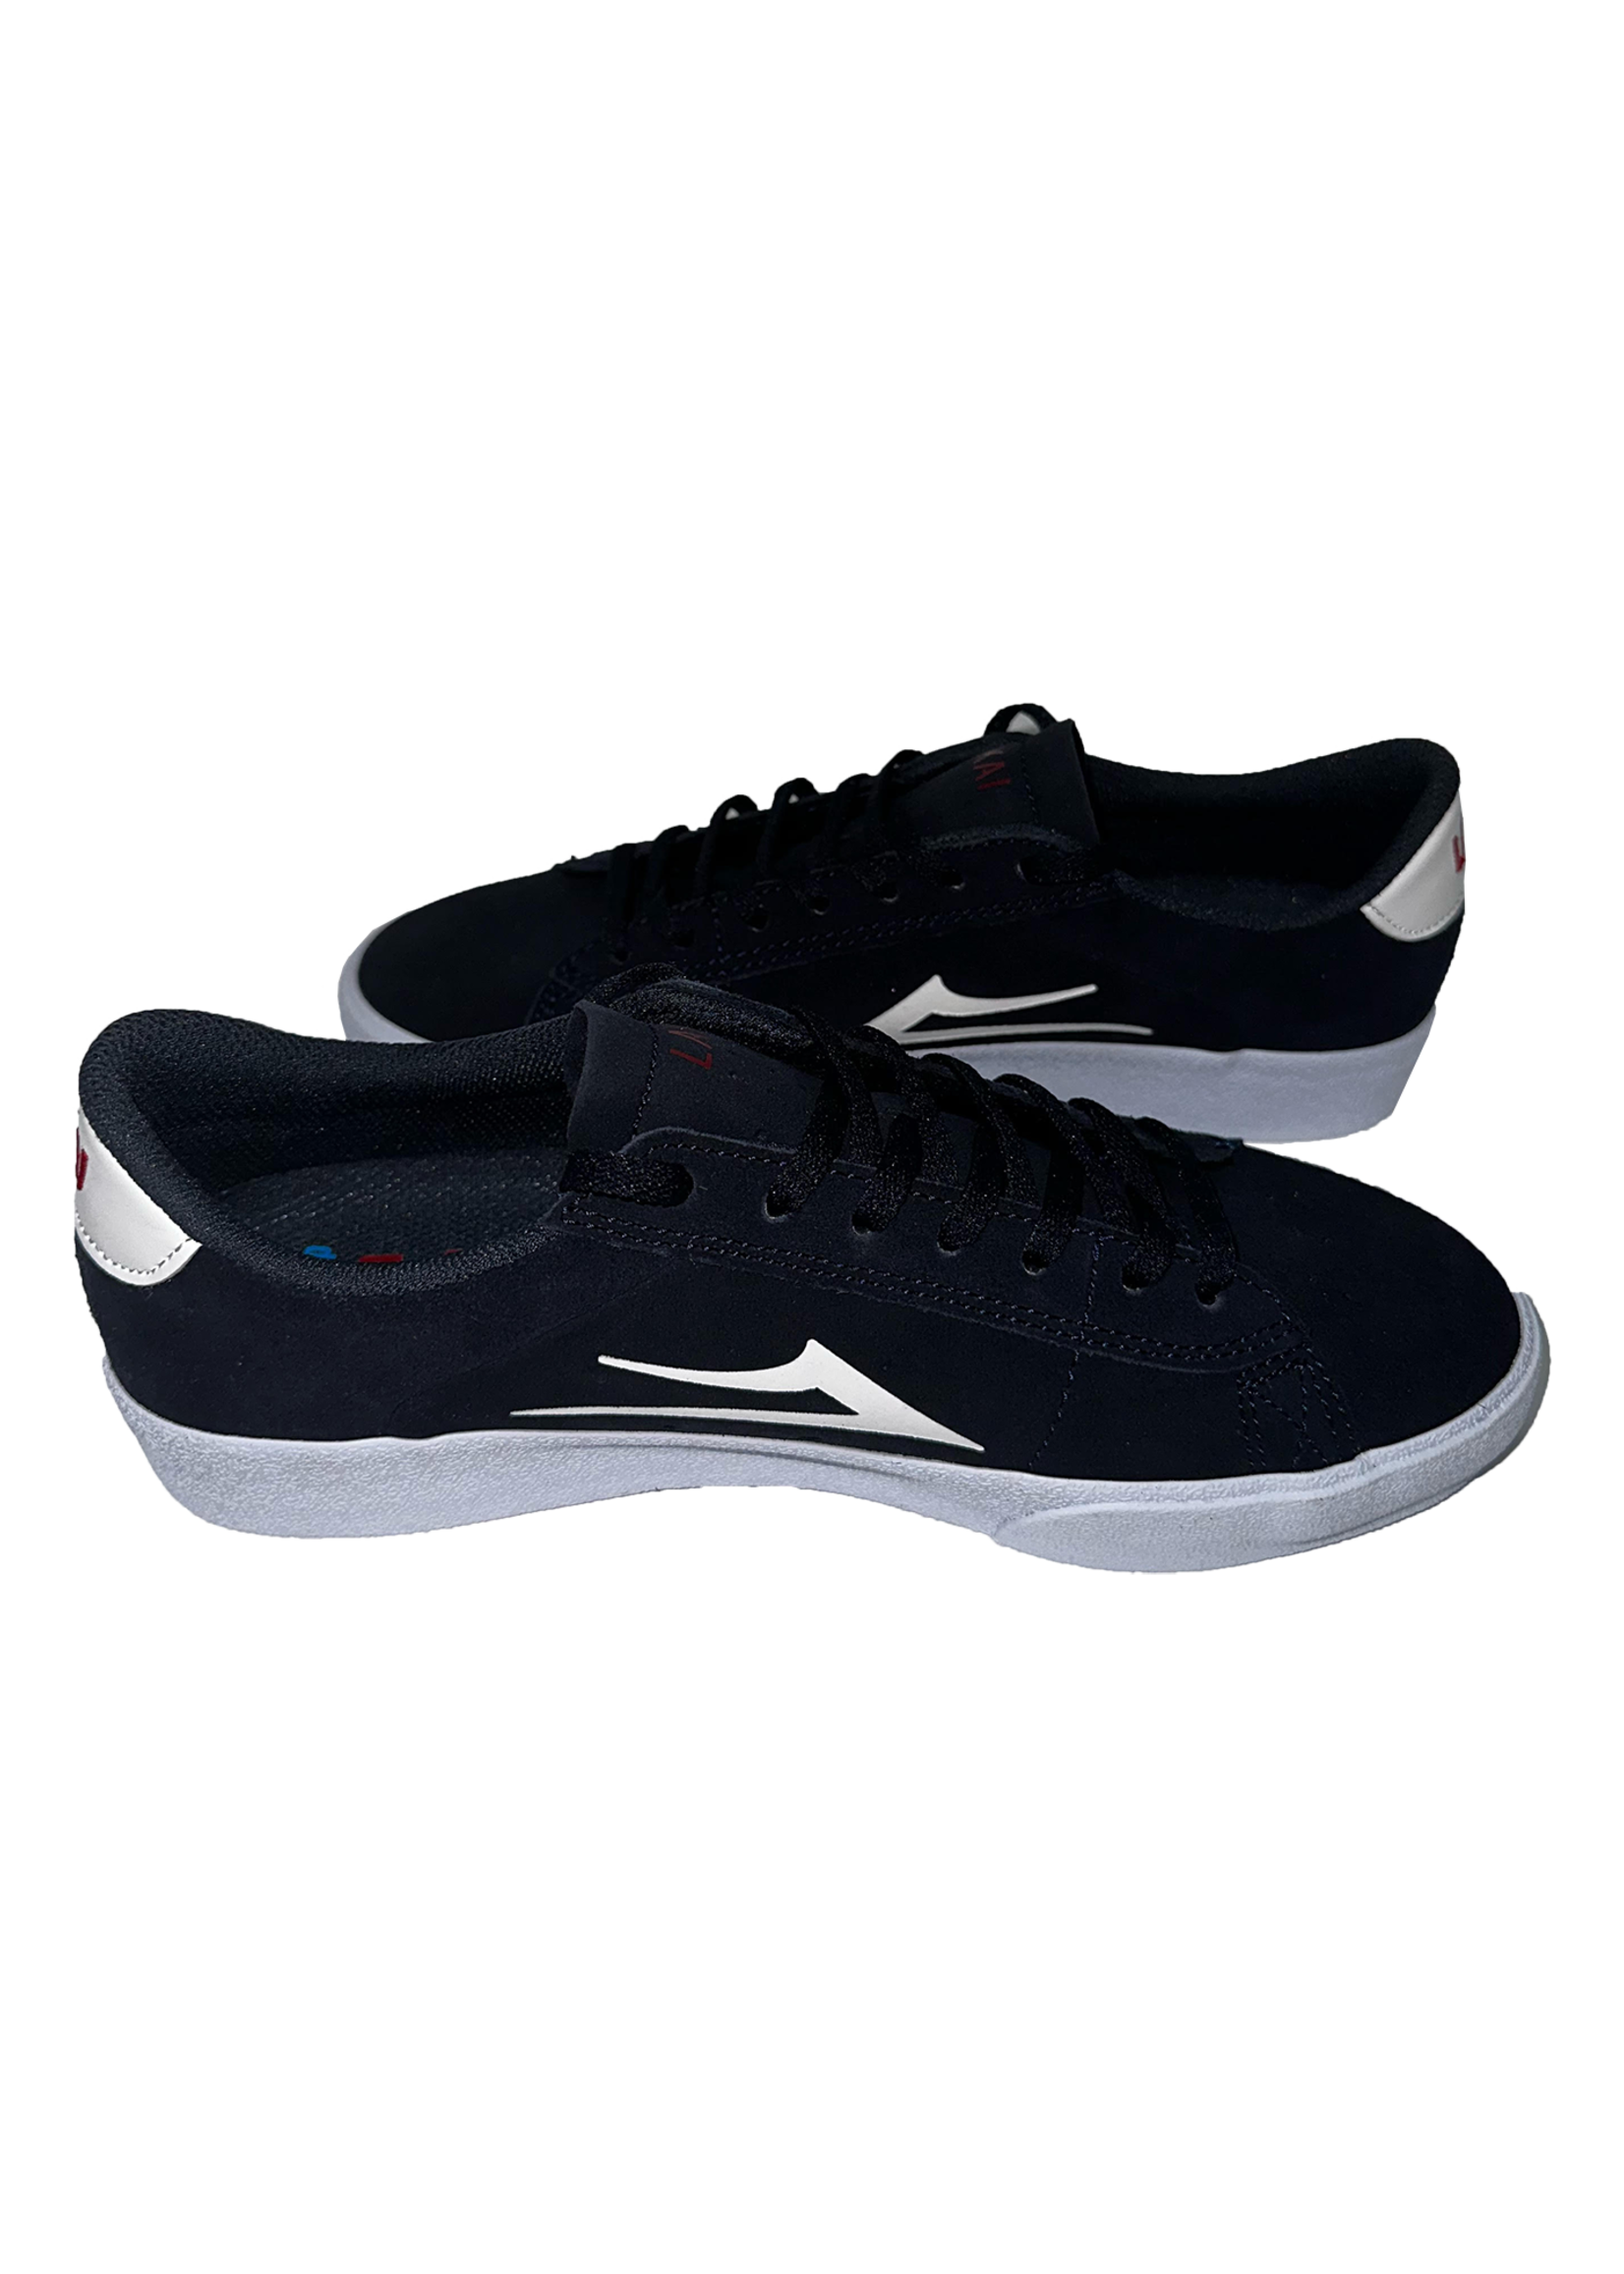 Lakai Ltd Footware Lakai - Shoes Newport - Navy Suede Man's Size 8 US